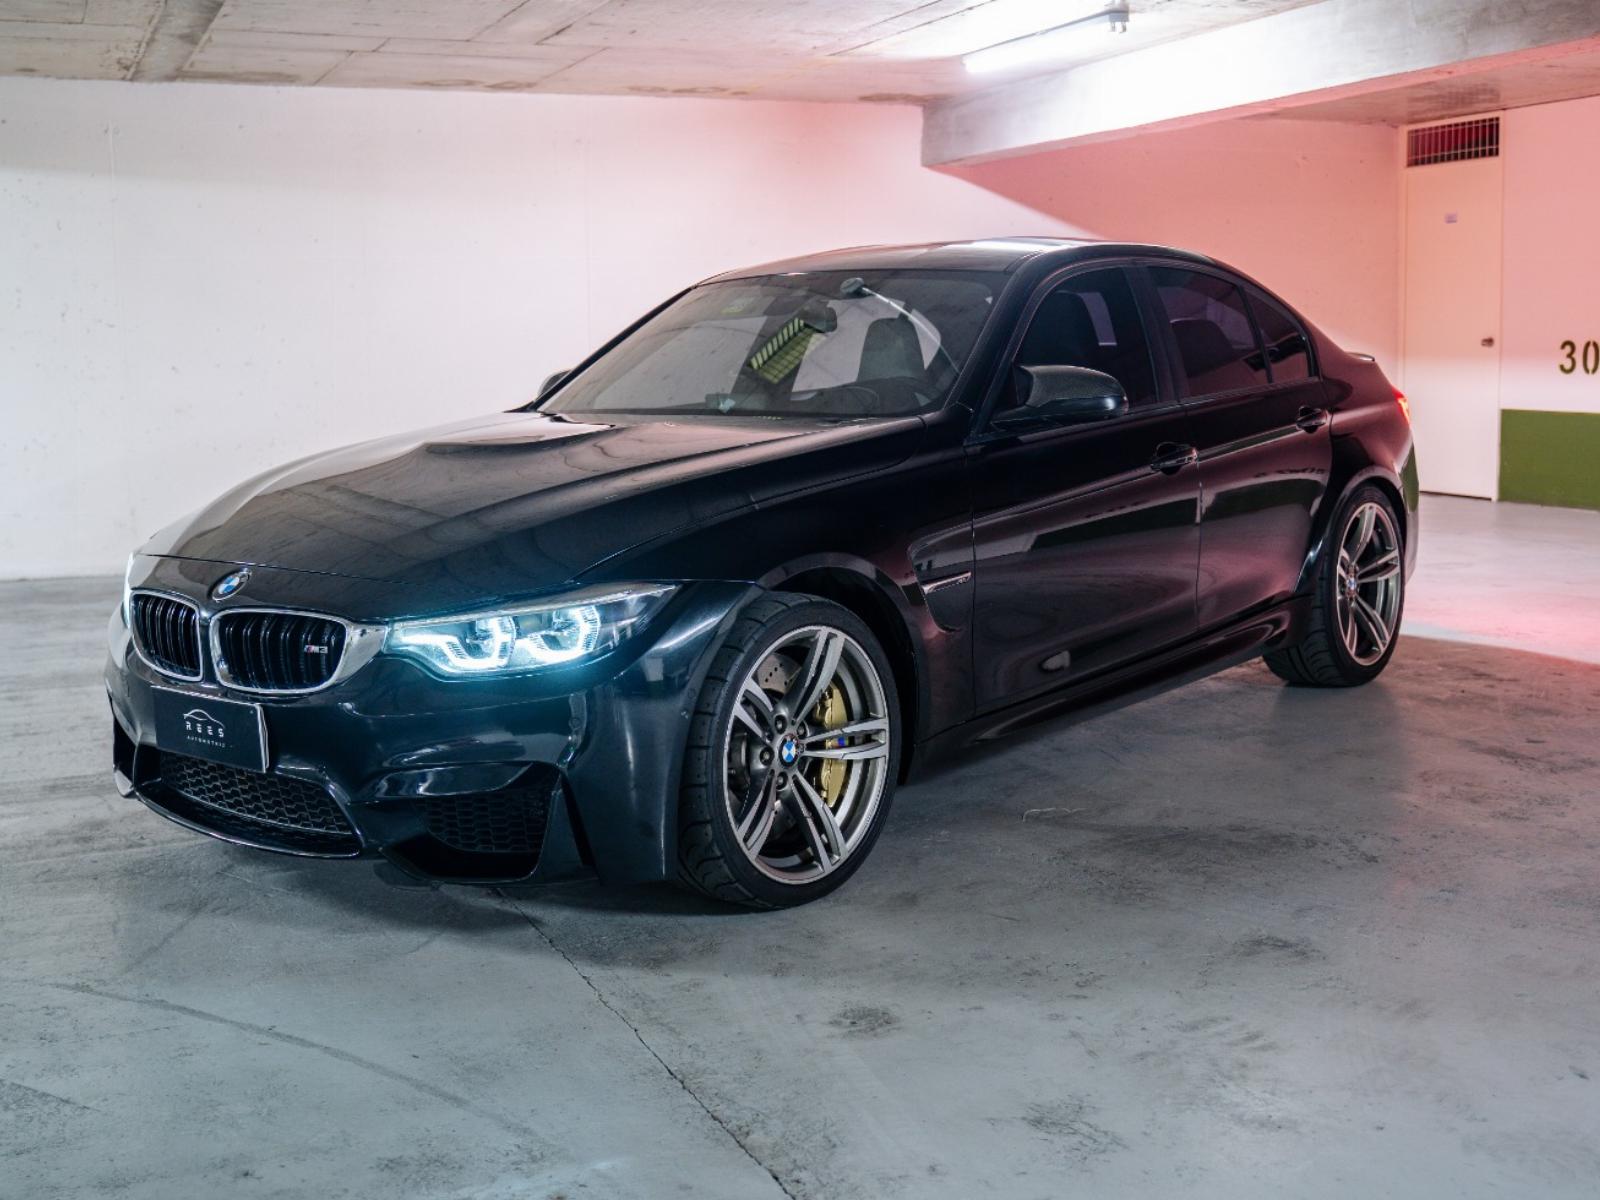 BMW M3 Sedán 2018 3.0 LTS - 431 HP - 